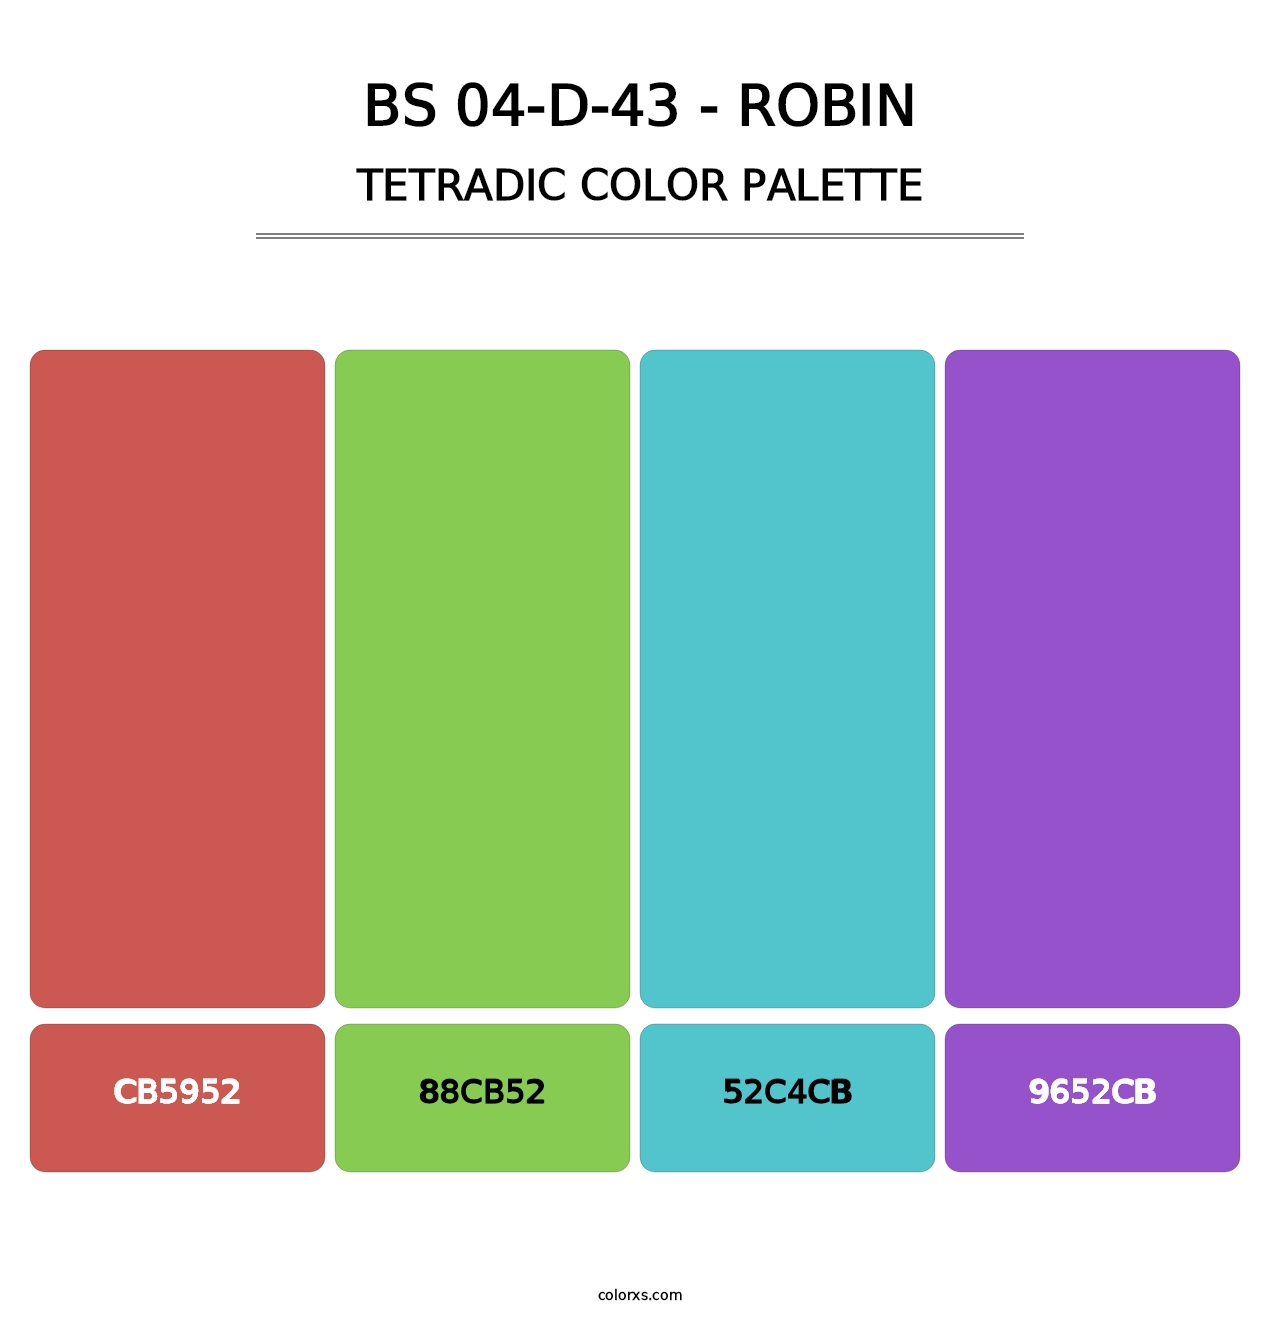 BS 04-D-43 - Robin - Tetradic Color Palette